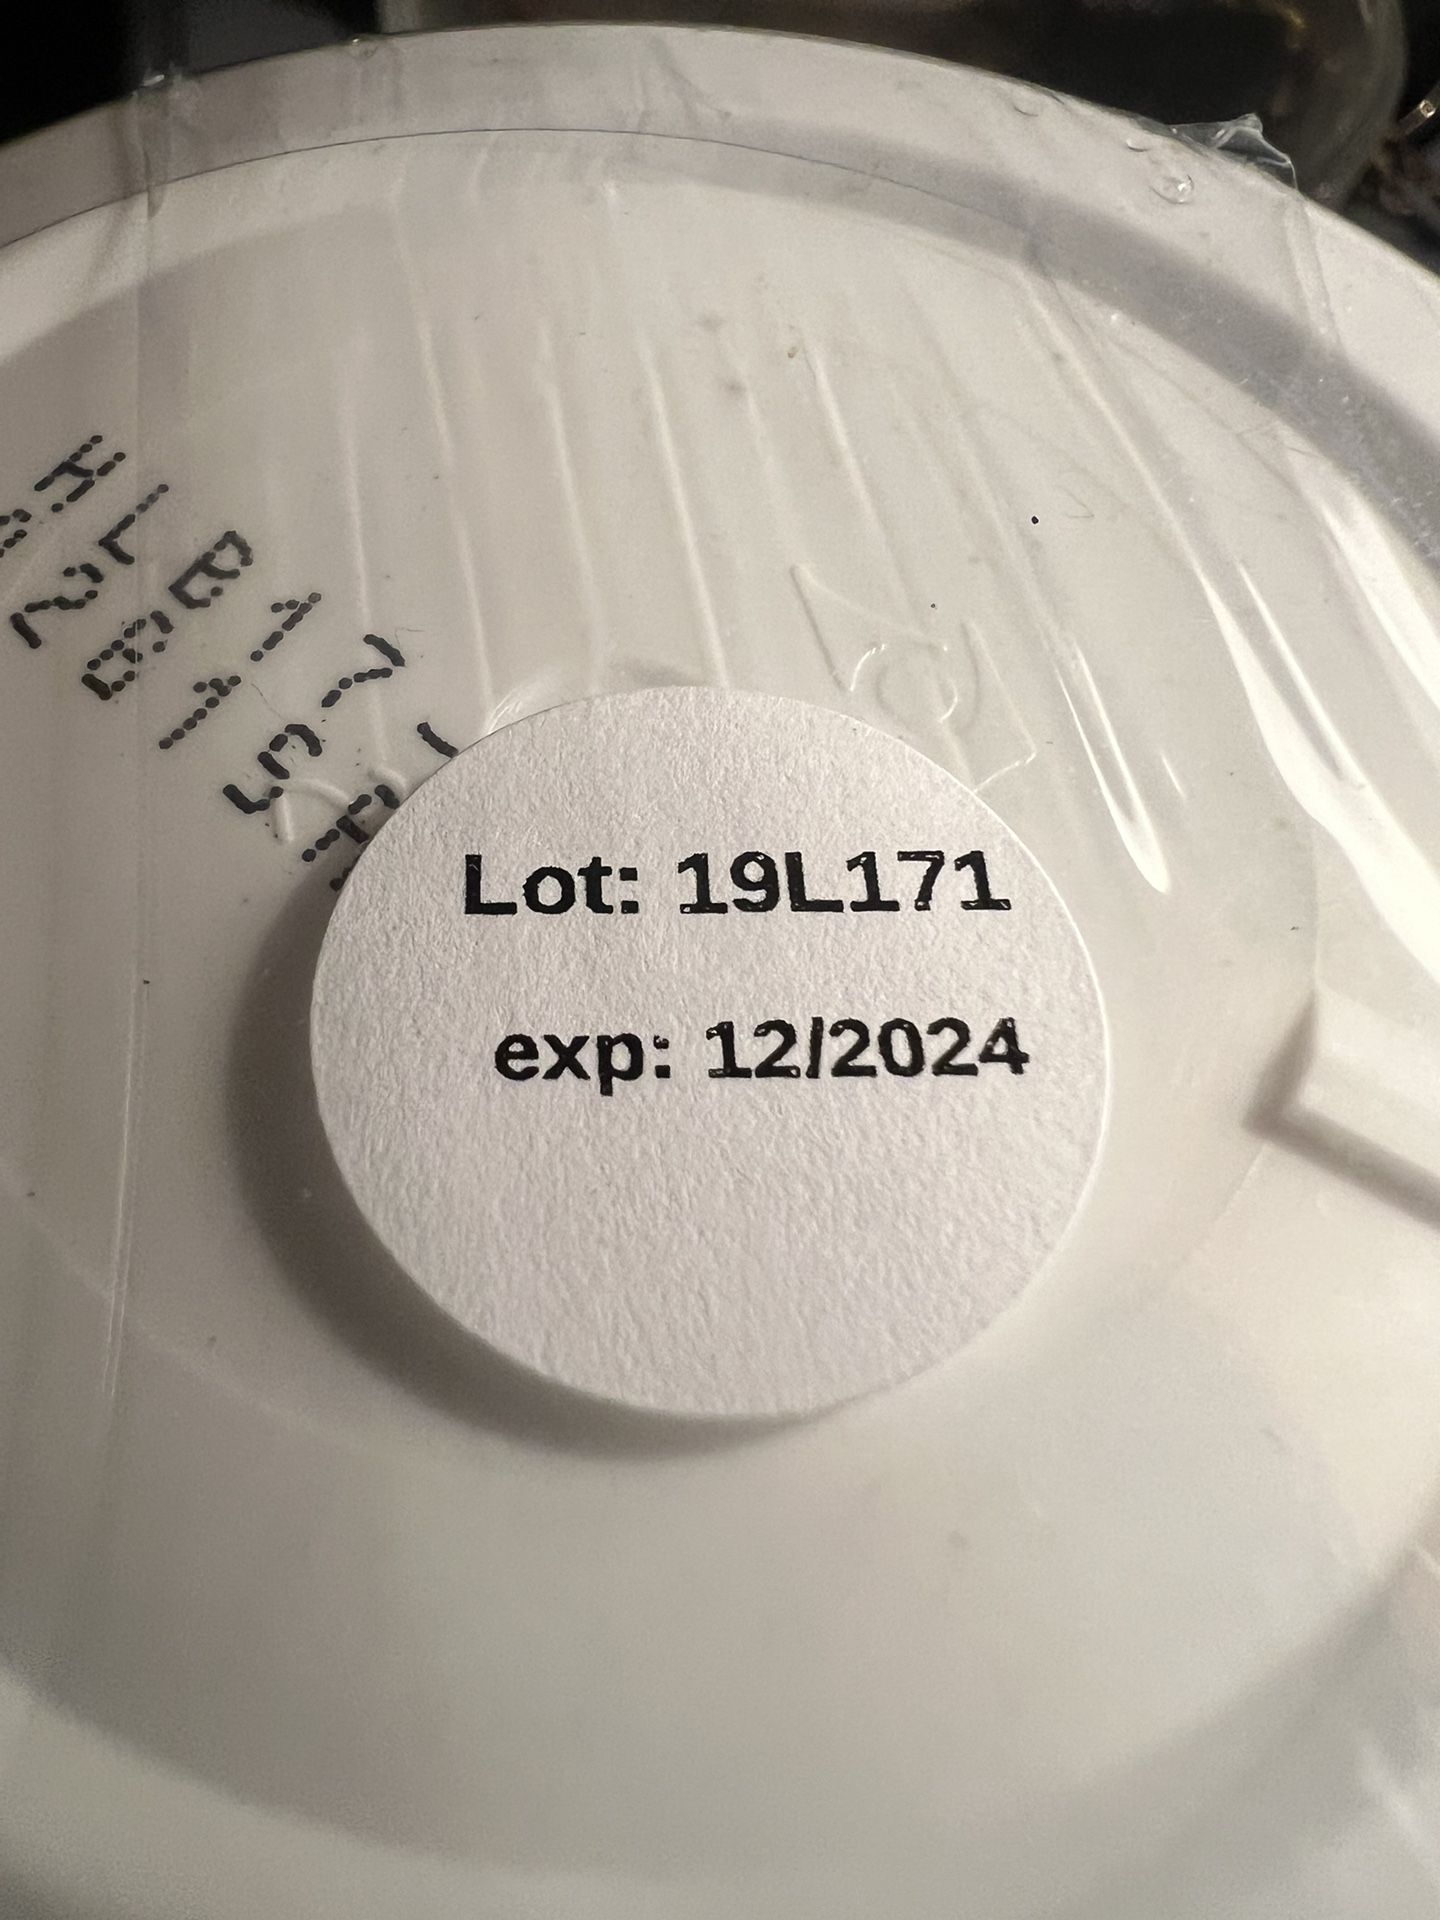 2 Jars Of OLLOPAIN ARNICA CREAM Sealed Expiration Date 12/2024